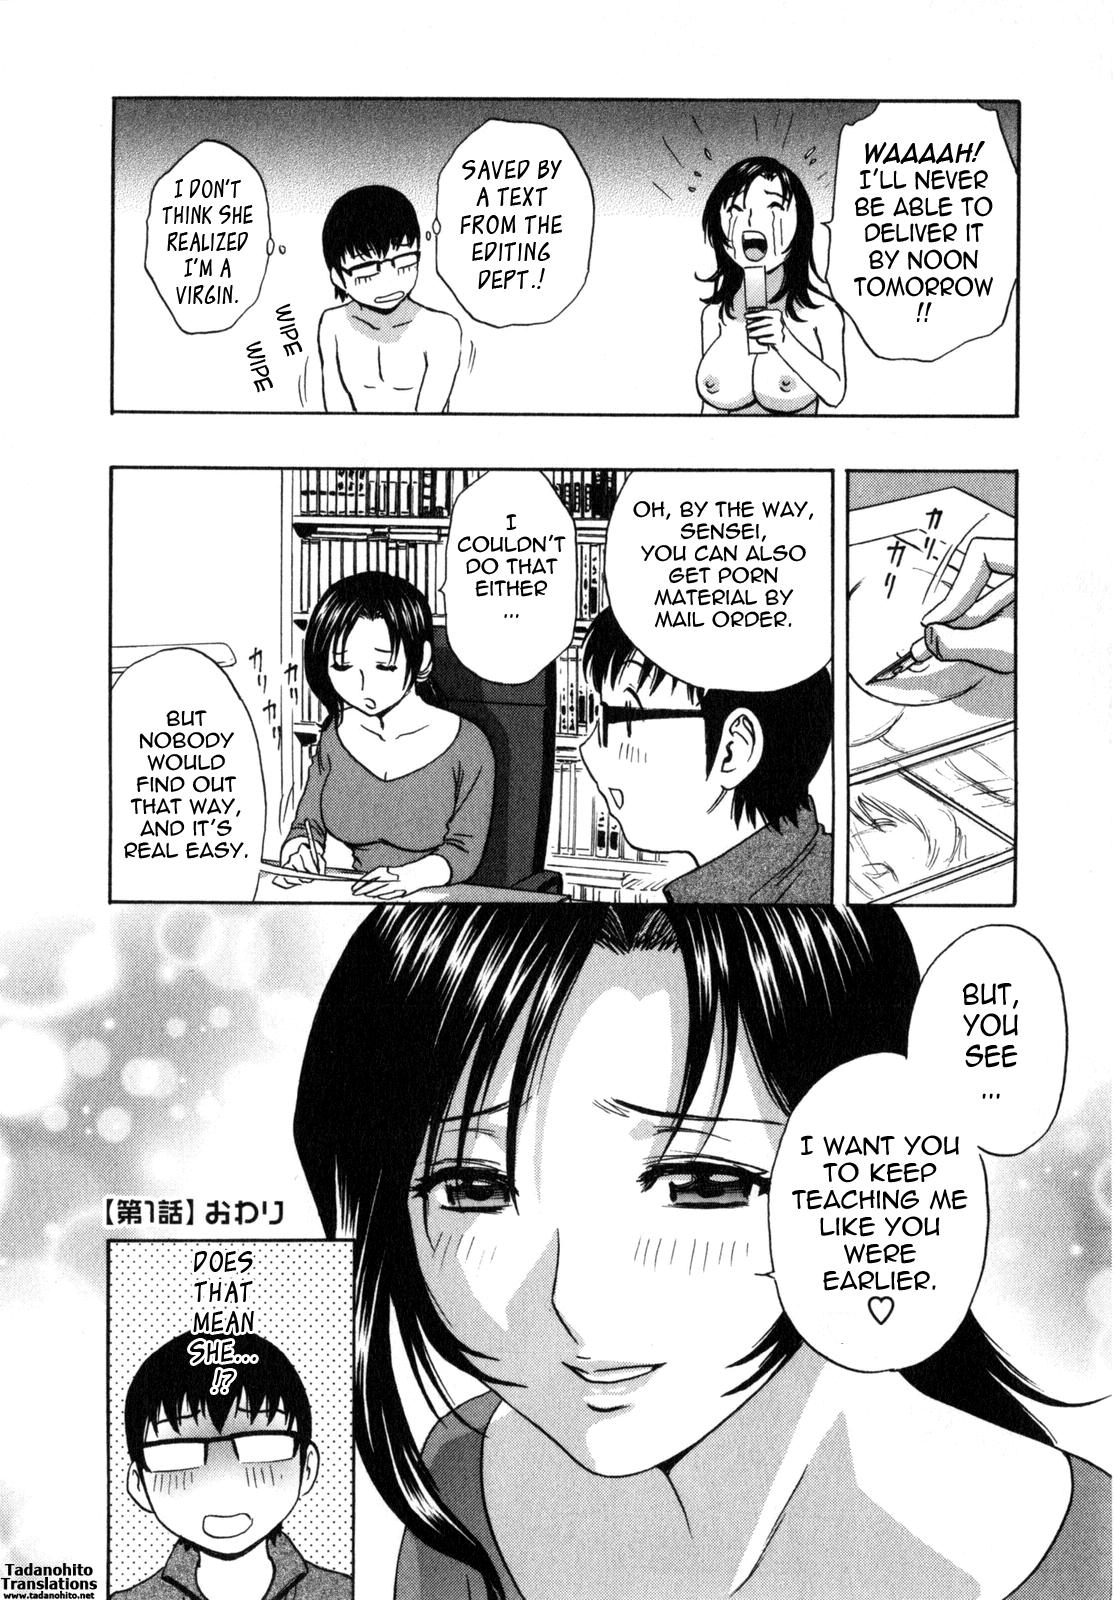 Life with Married Women Just Like a Manga 1 24